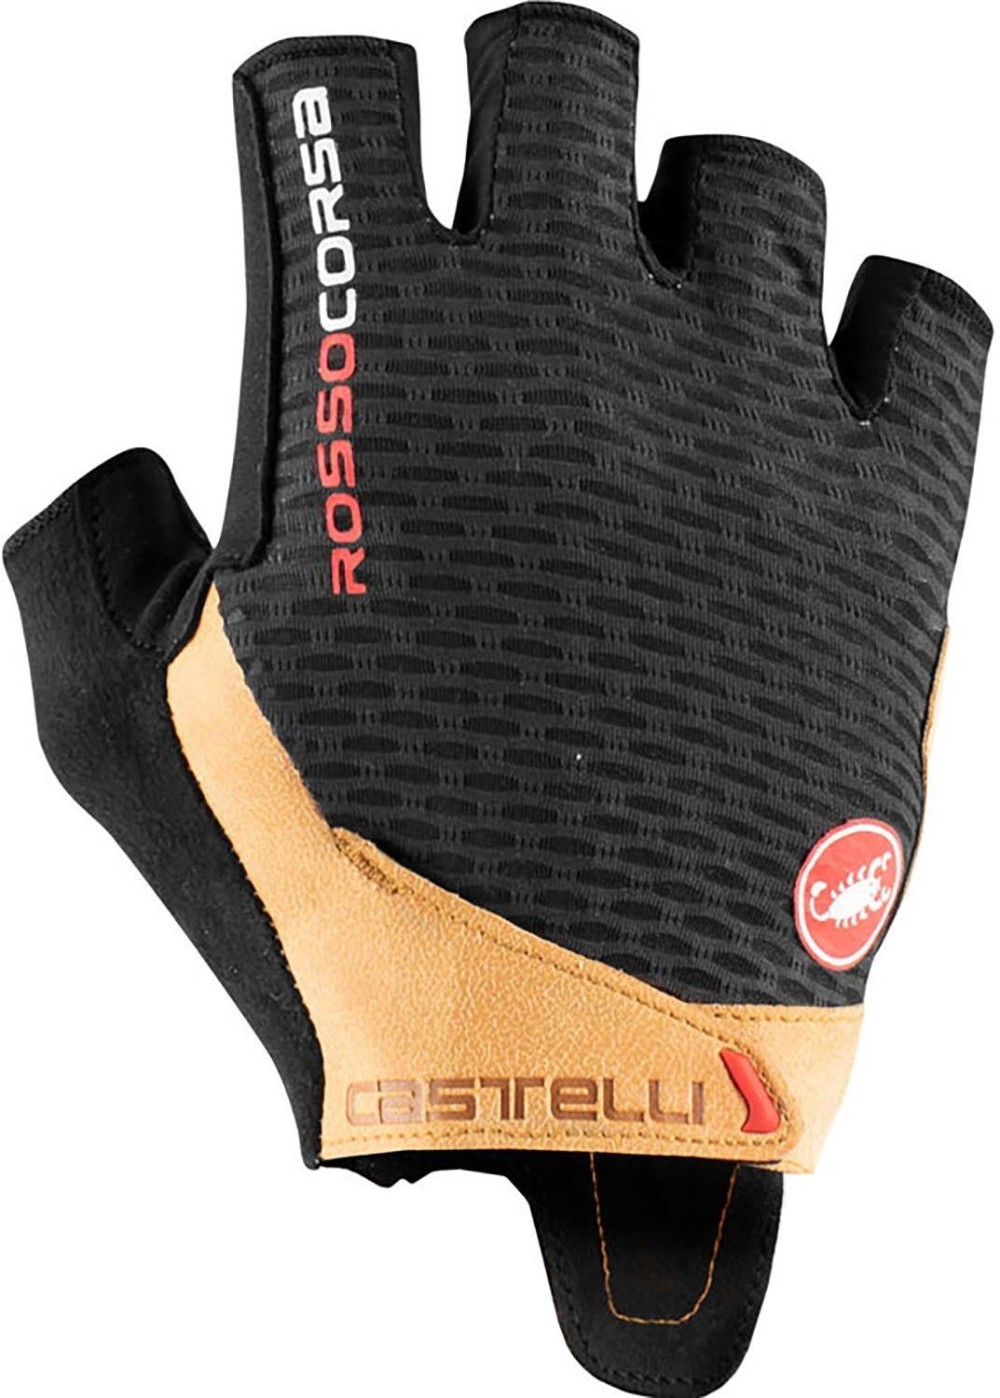 Rosso Corsa Pro V Mitts Short Finger Gloves image 0